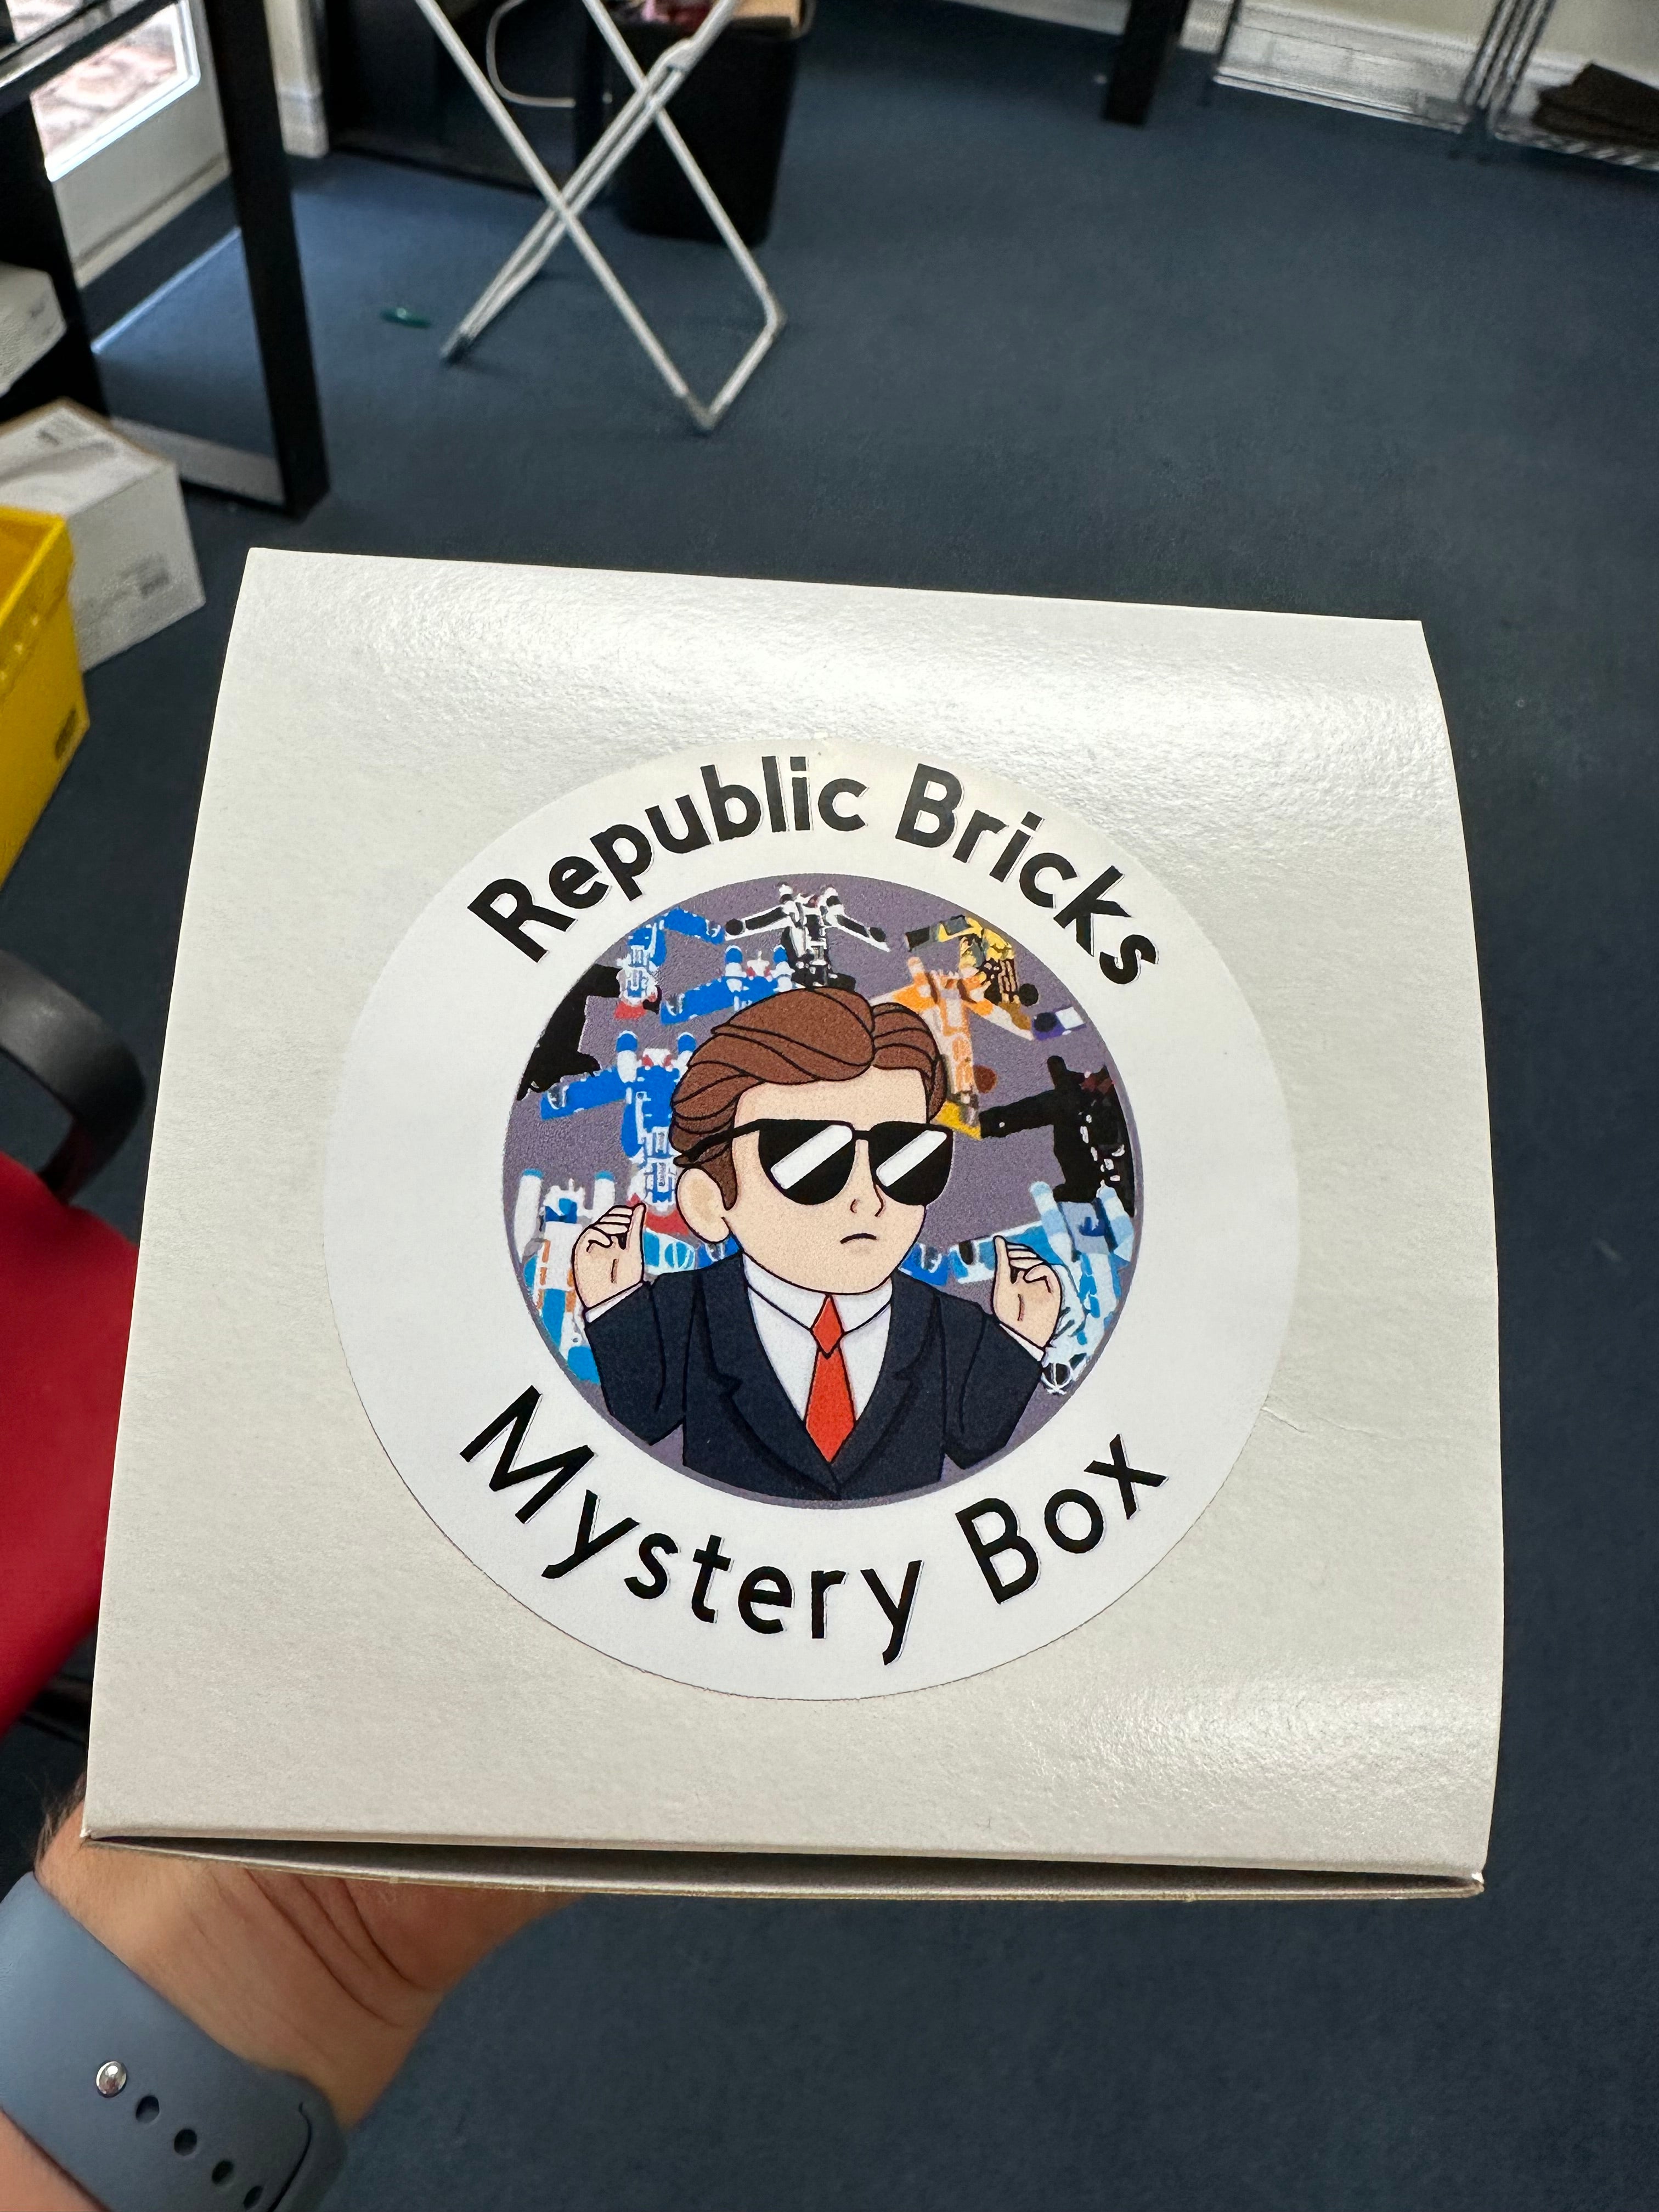 1ST EDITION REPUBLICBRICKS MYSTERY BOX!